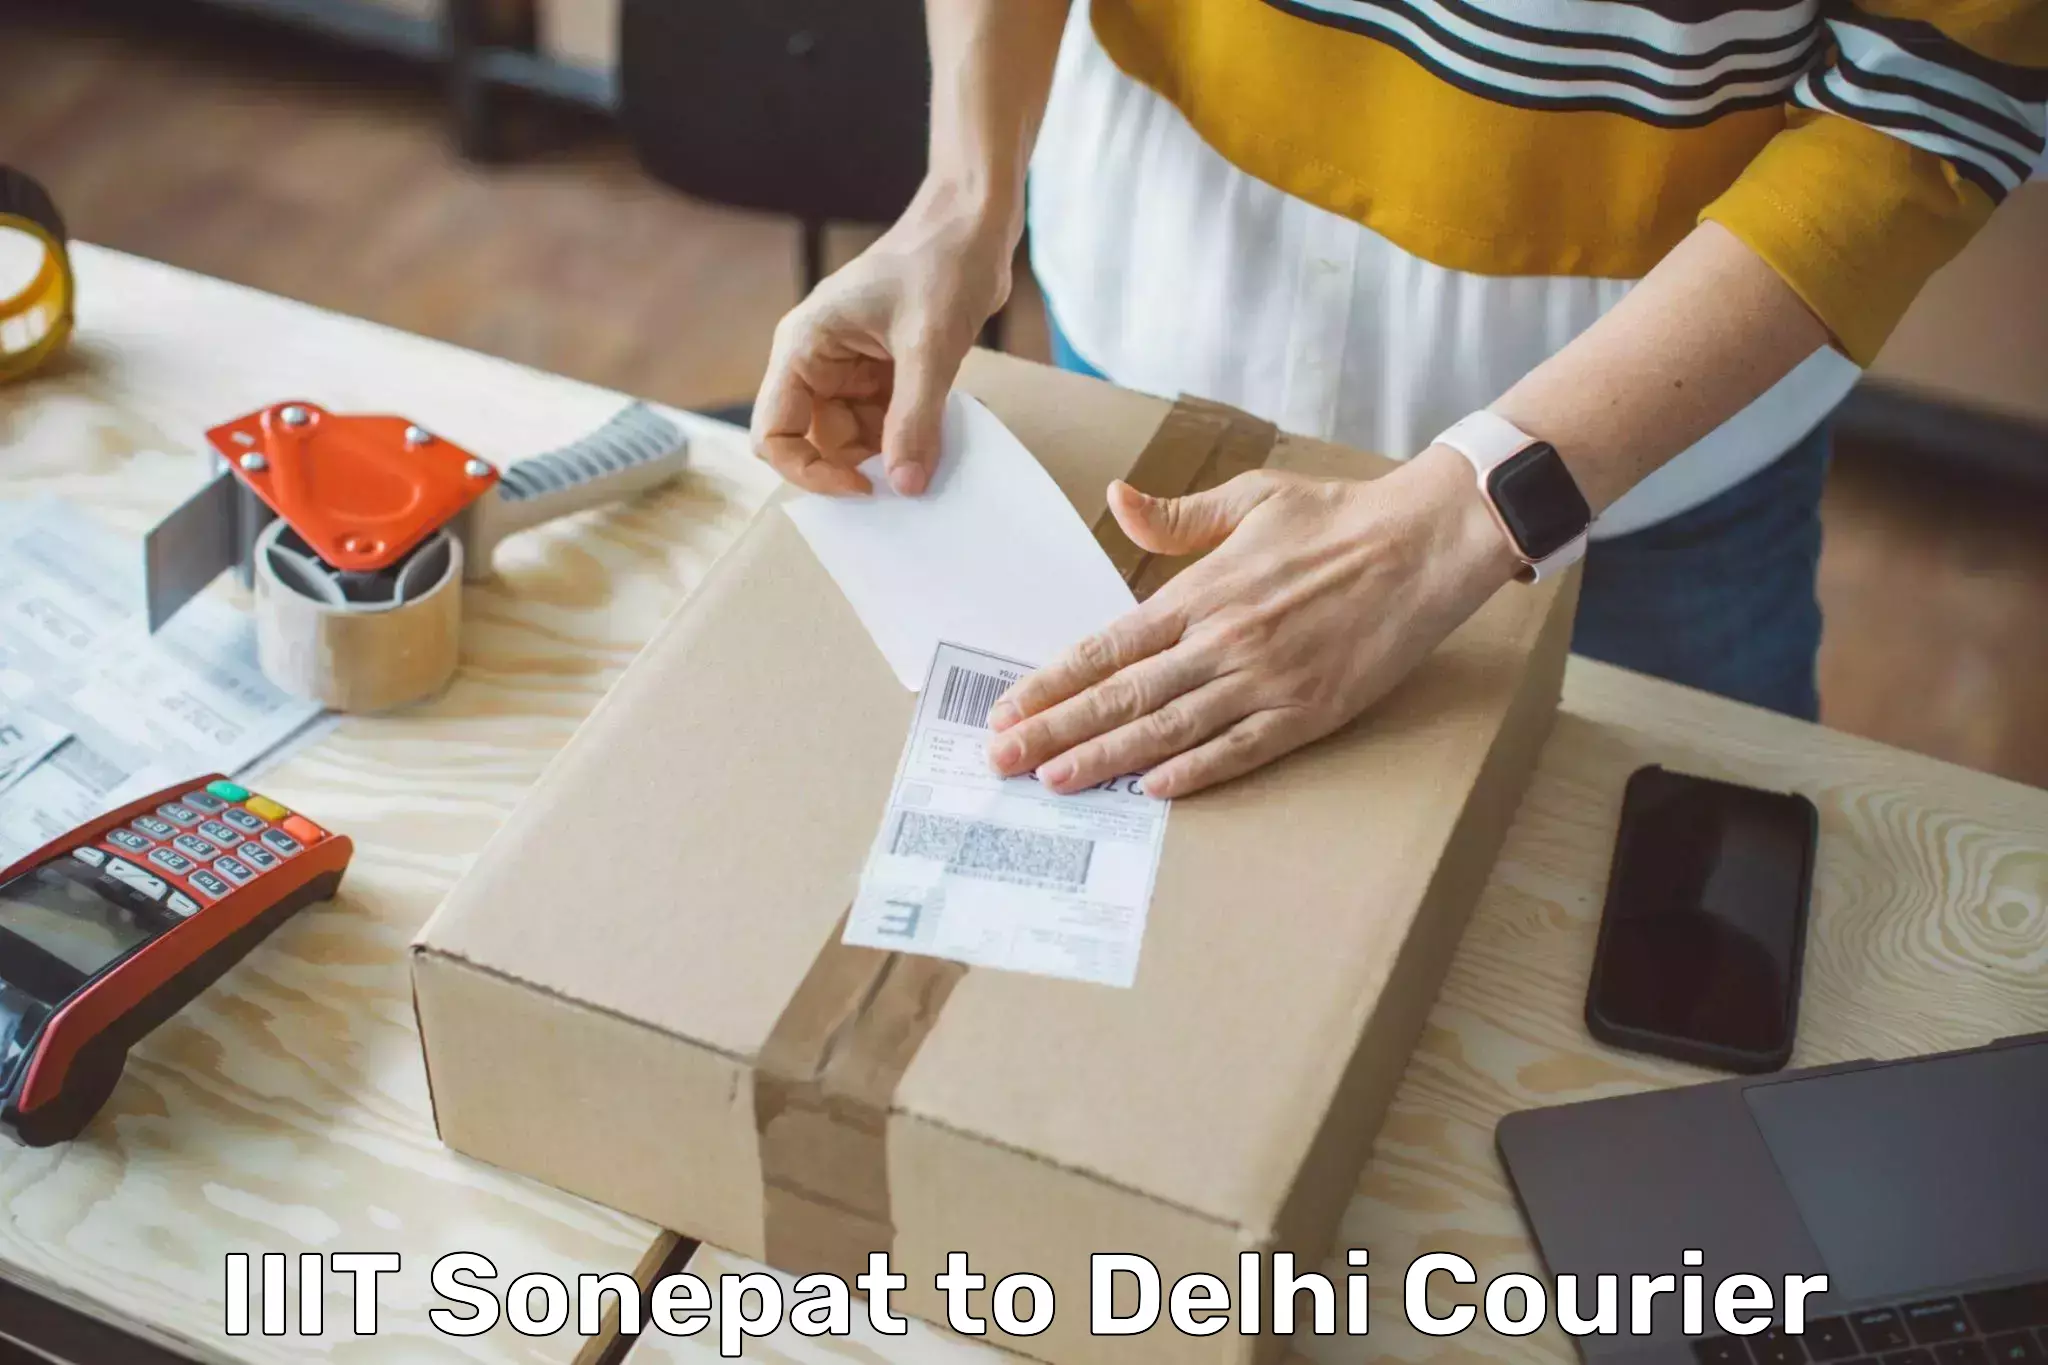 Scheduled delivery IIIT Sonepat to Jawaharlal Nehru University New Delhi